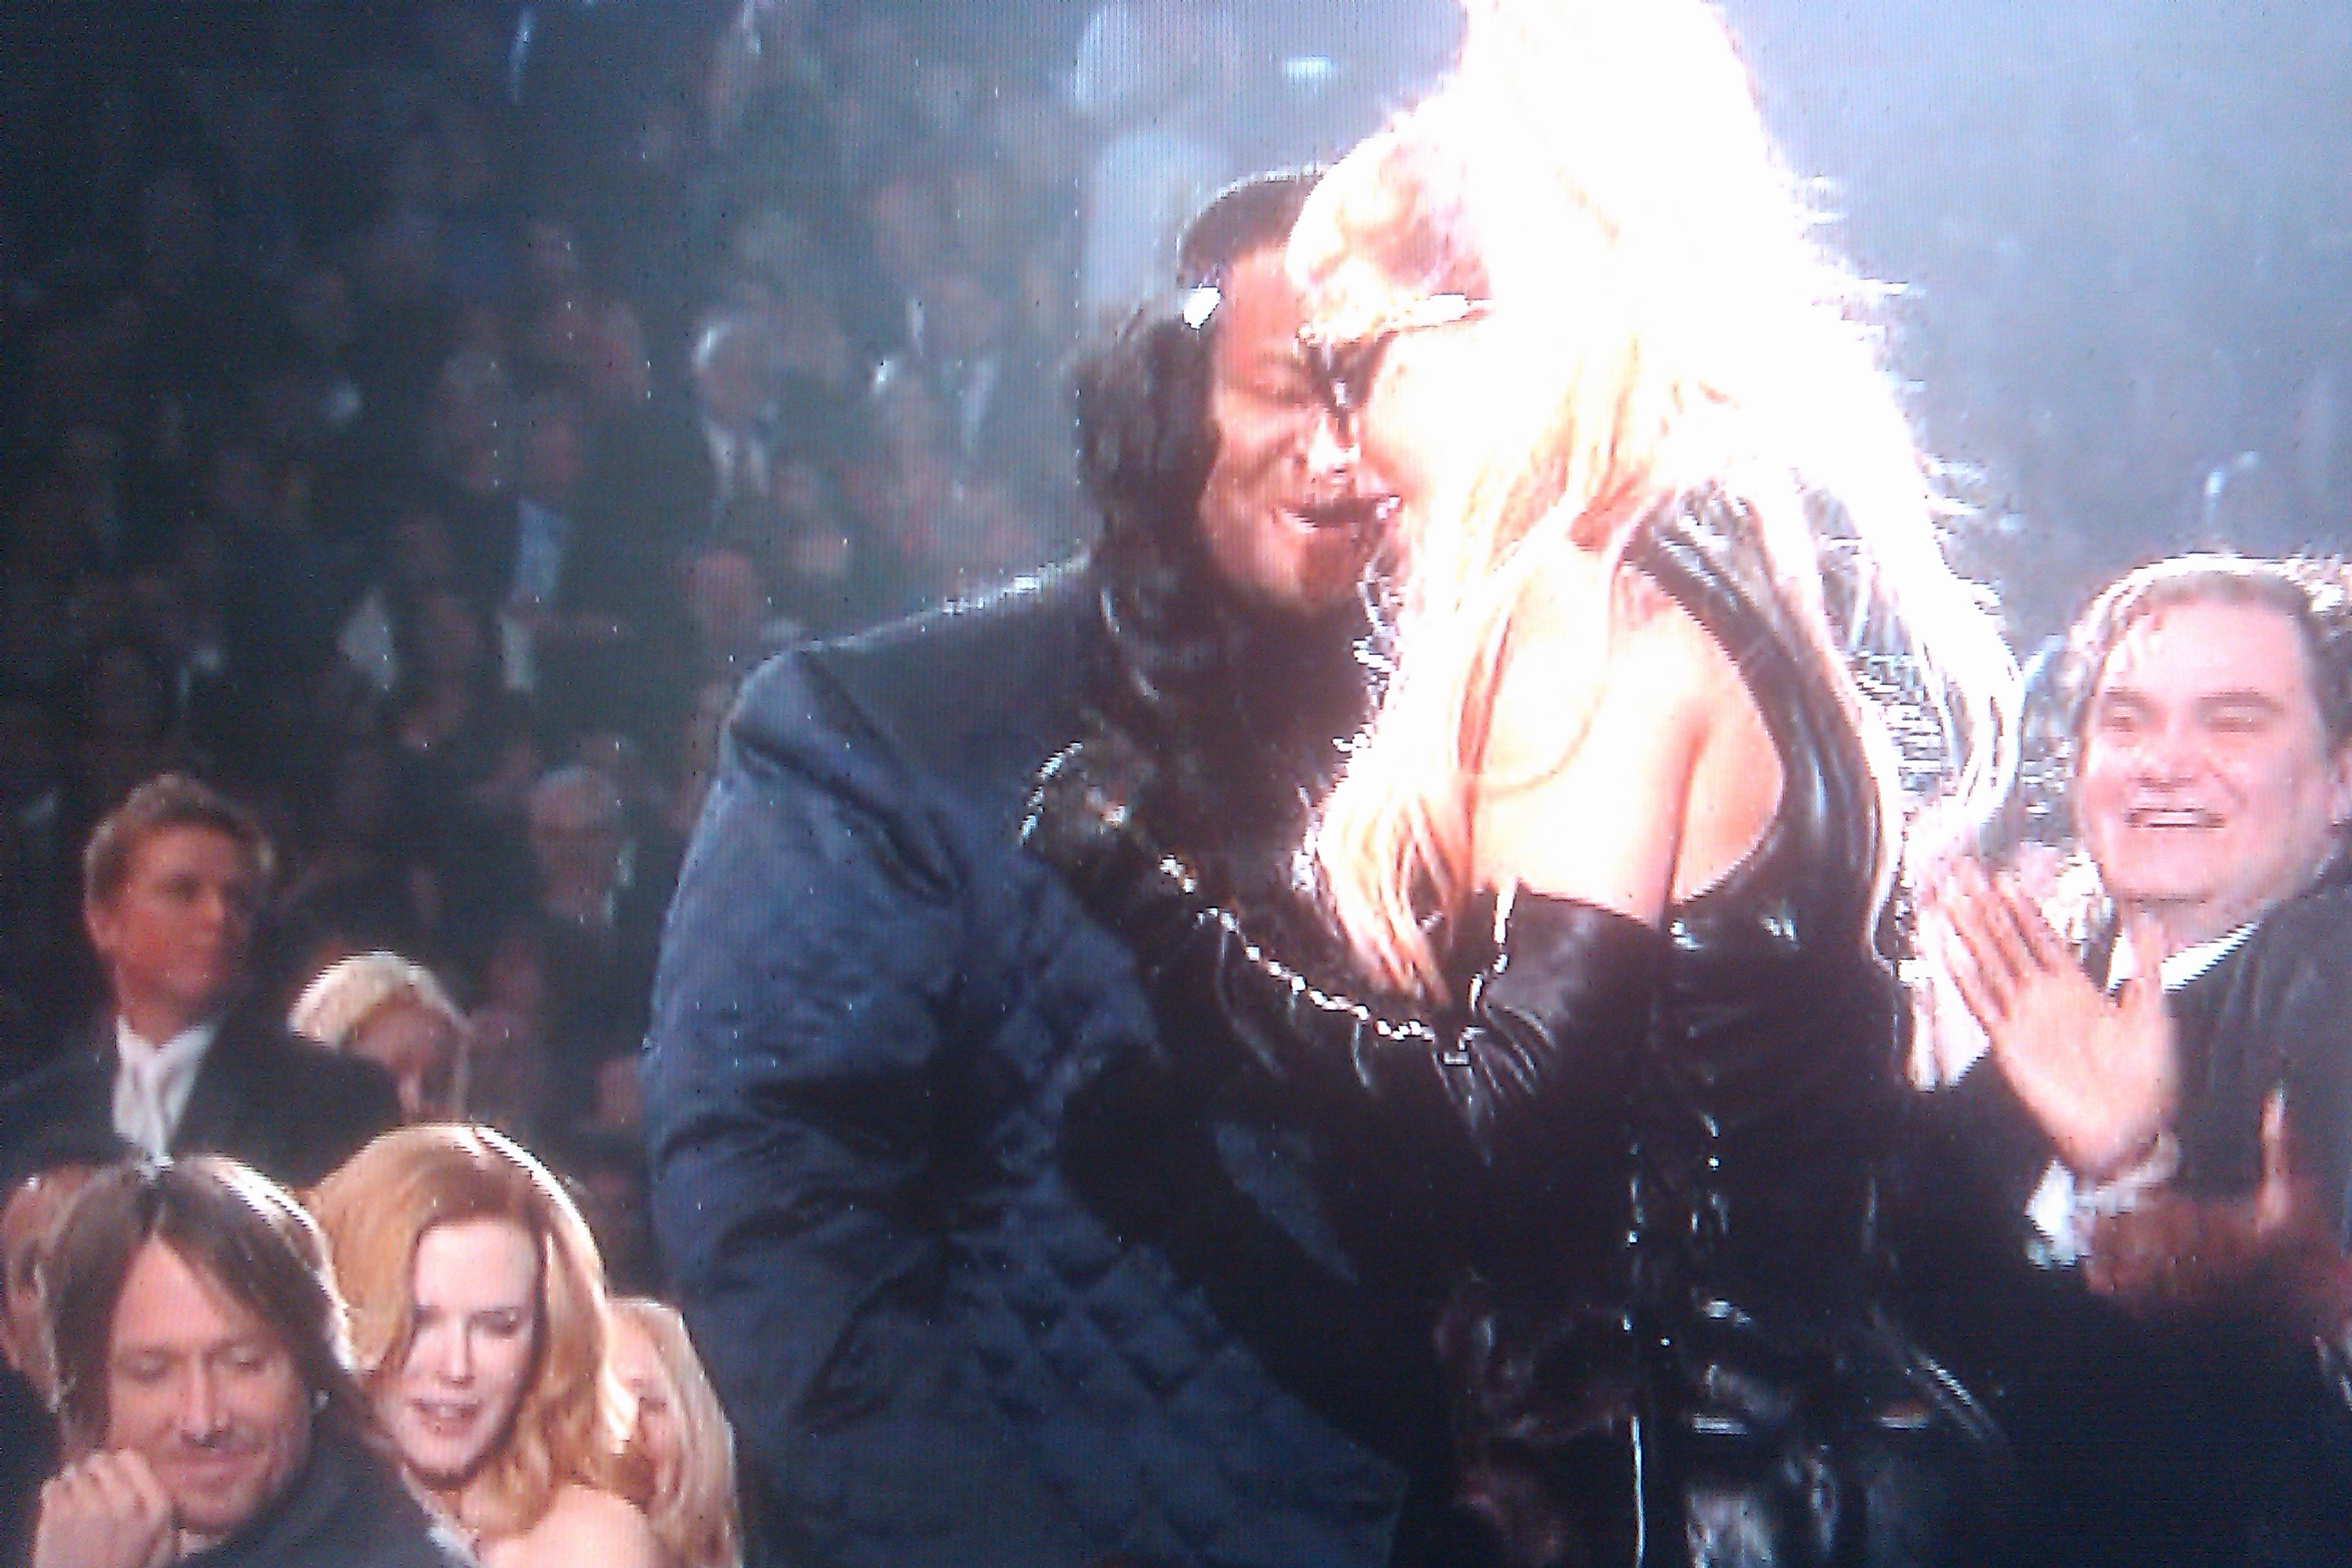 Keith Urban,Nicole Kidman,Lady GaGa & Pierre Patrick at The Grammys